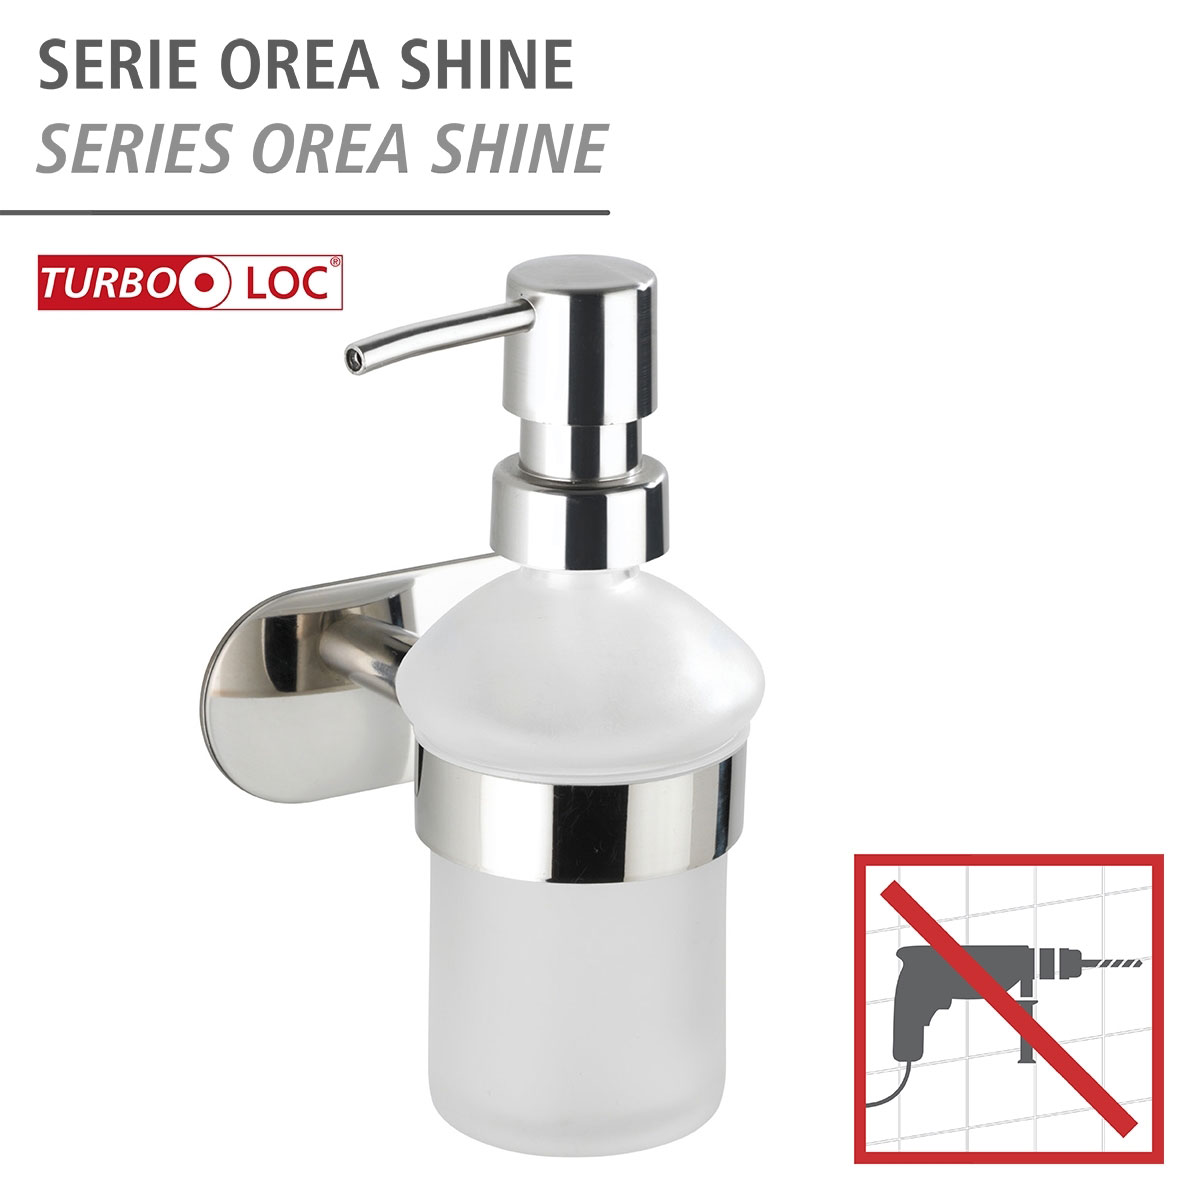 Wenko Turbo-Loc Seifenspender Orea Shine ca 200 ml | 503696